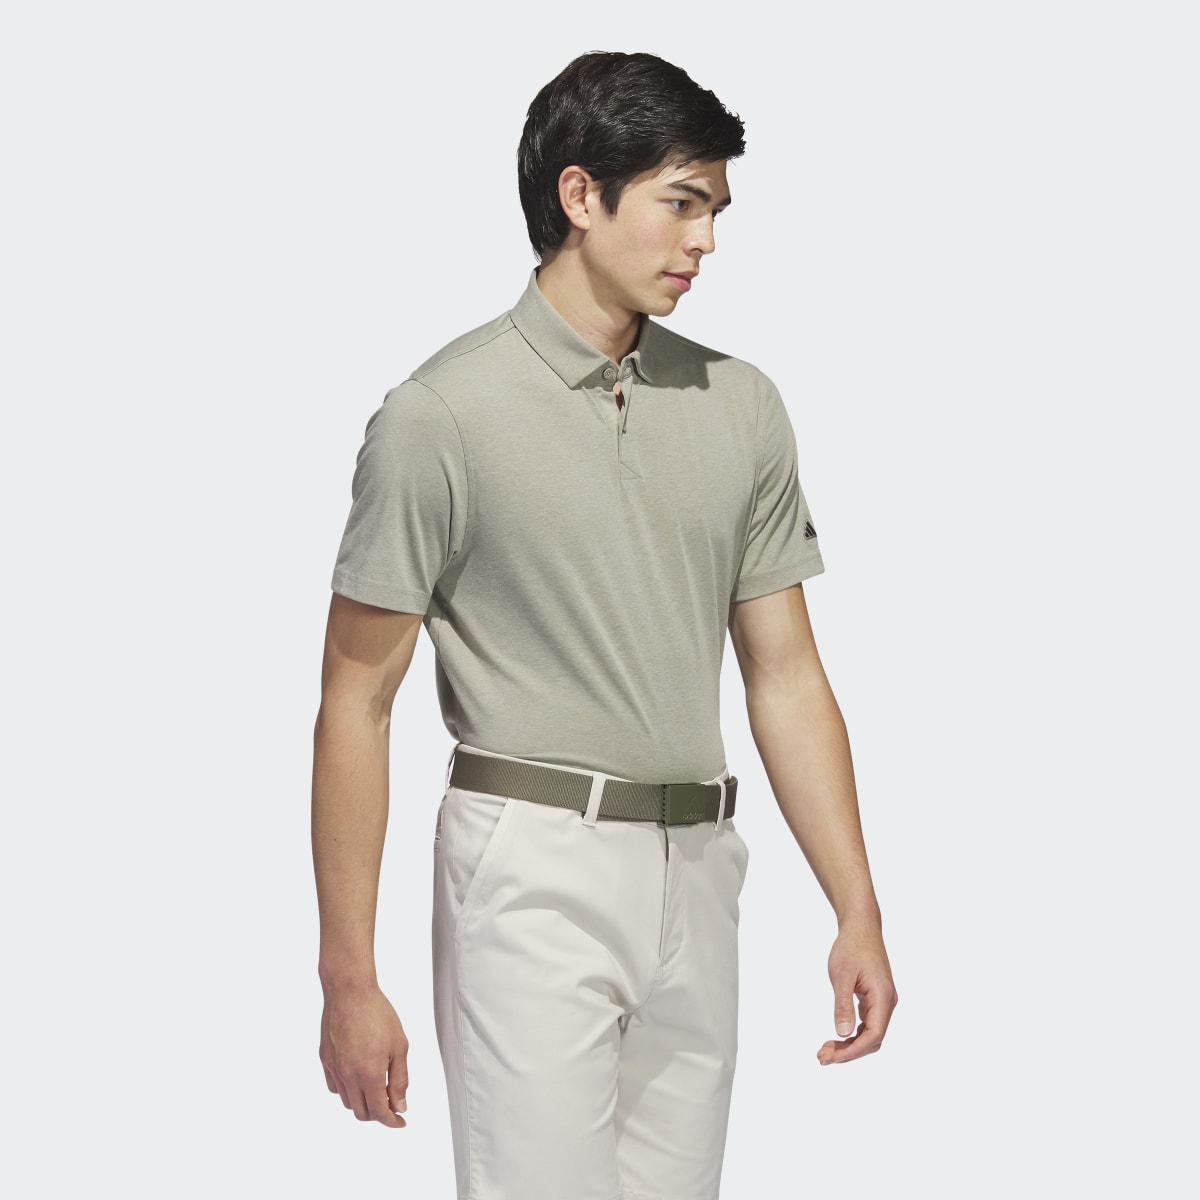 Adidas Go-To Golf Polo Shirt. 4